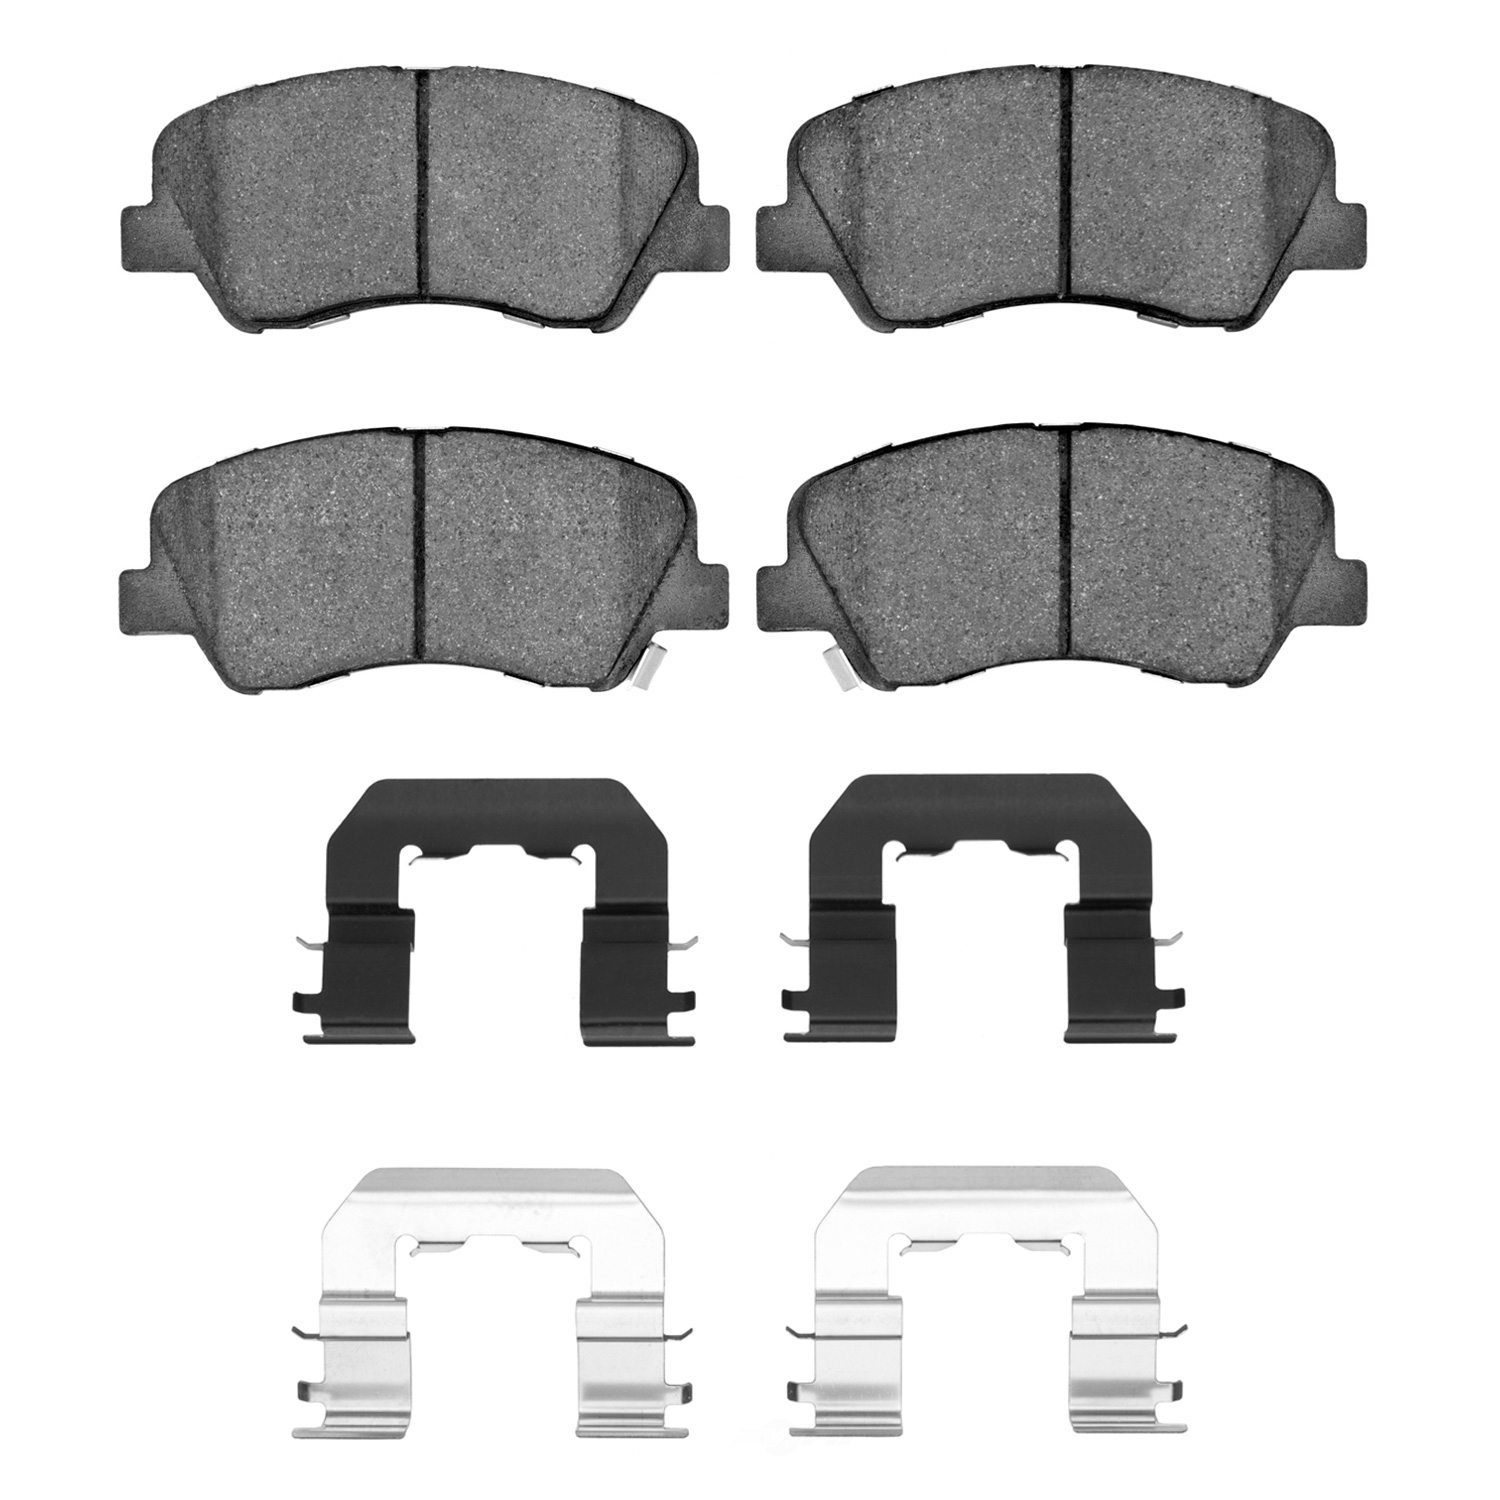 DFC - DFC 5000 Advanced Brake Pads - Ceramic and Hardware Kit (Front) - DF1 1551-1593-01